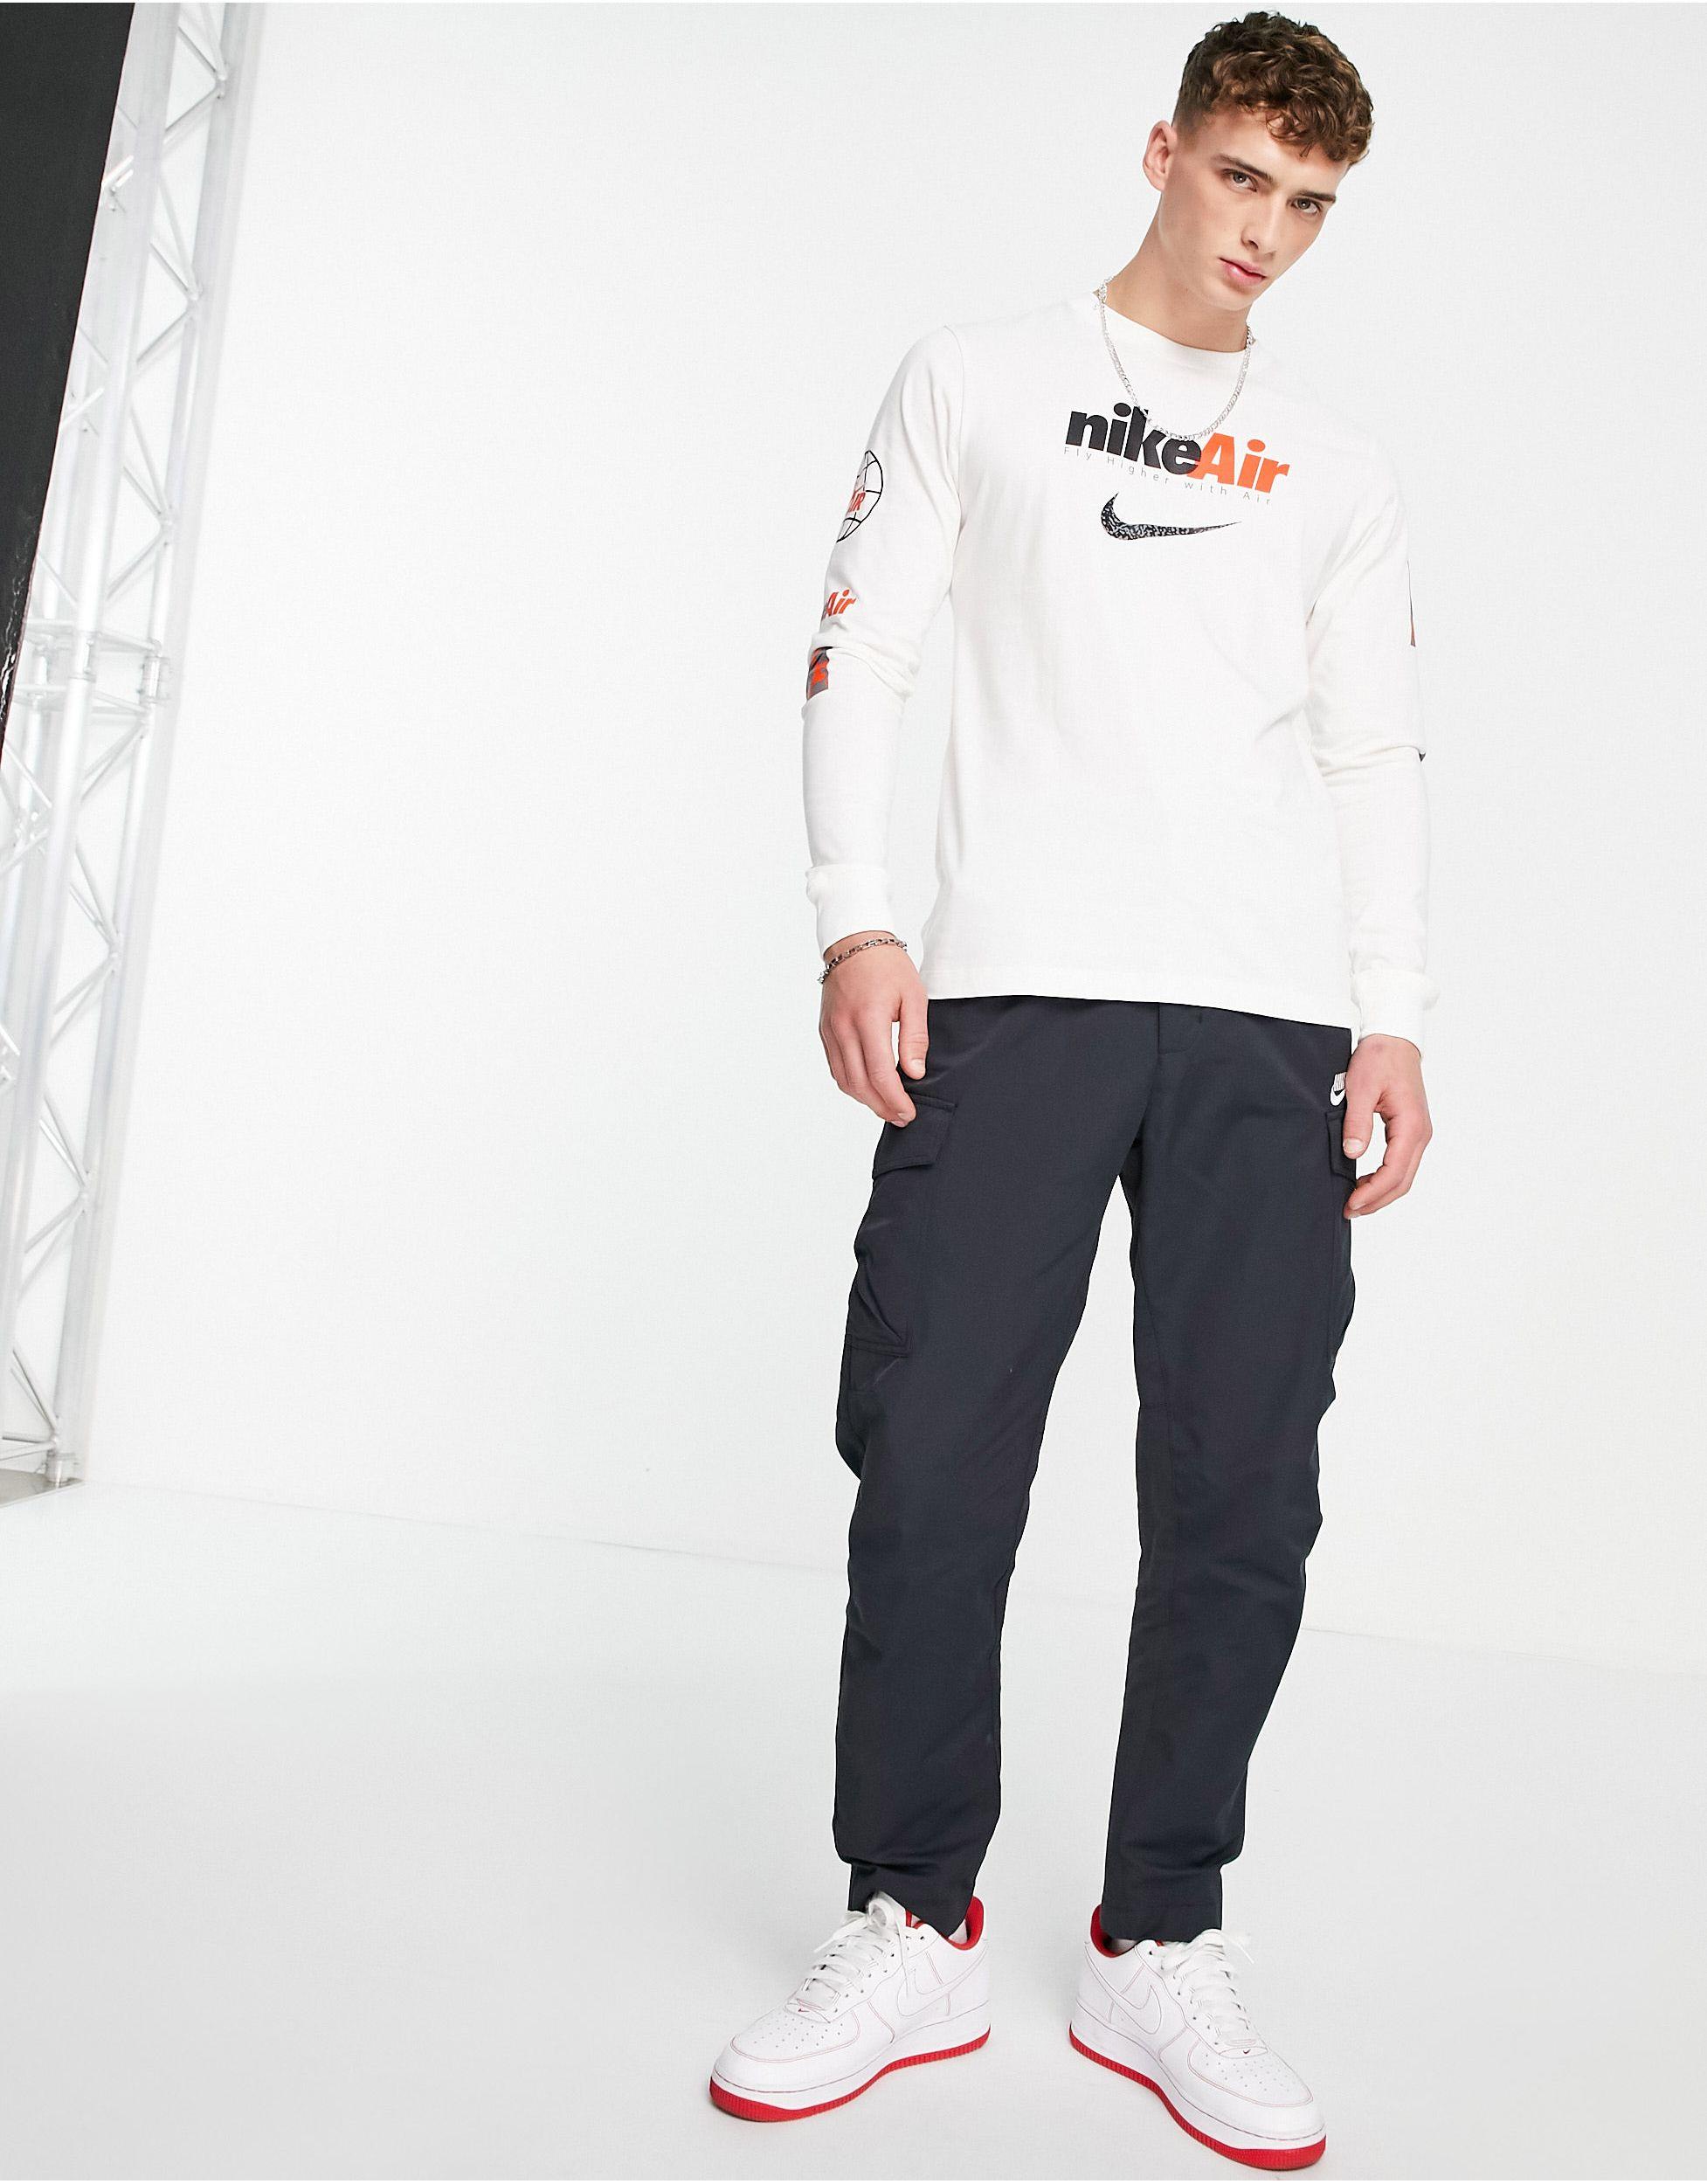 Nike Air Sleeve Print Long Sleeve T-shirt in White for Men - Lyst